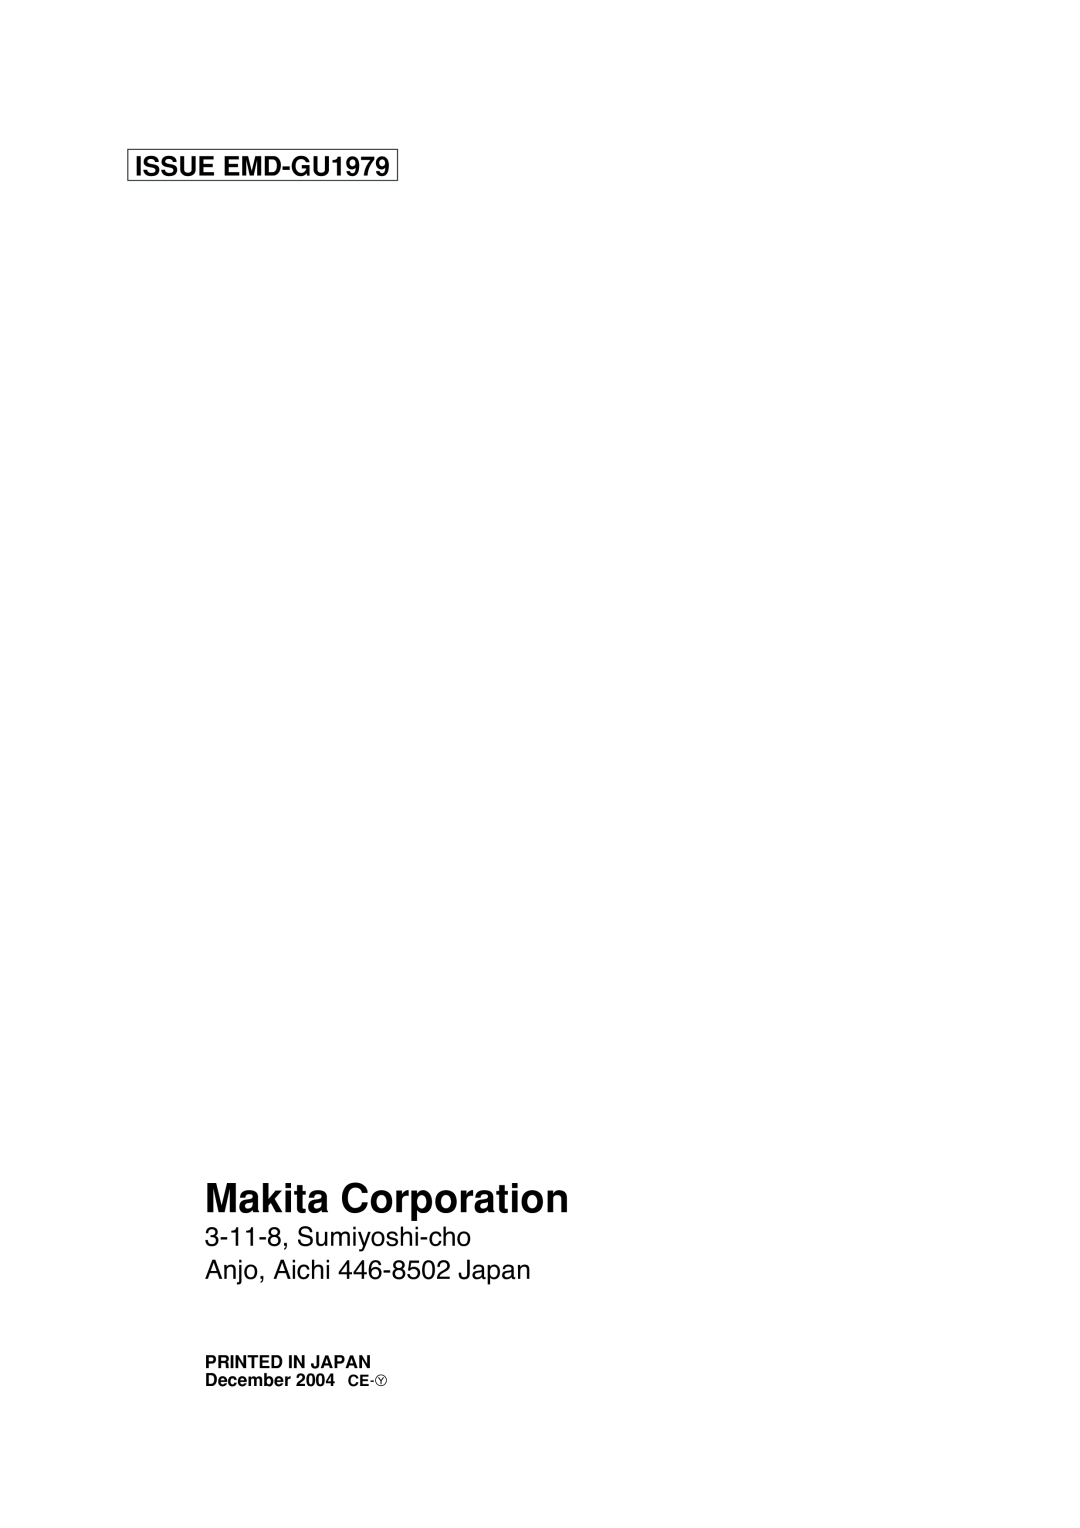 Makita G1700i manual ISSUE EMD-GU1979, Makita Corporation, 3-11-8, Sumiyoshi-cho Anjo, Aichi 446-8502 Japan 